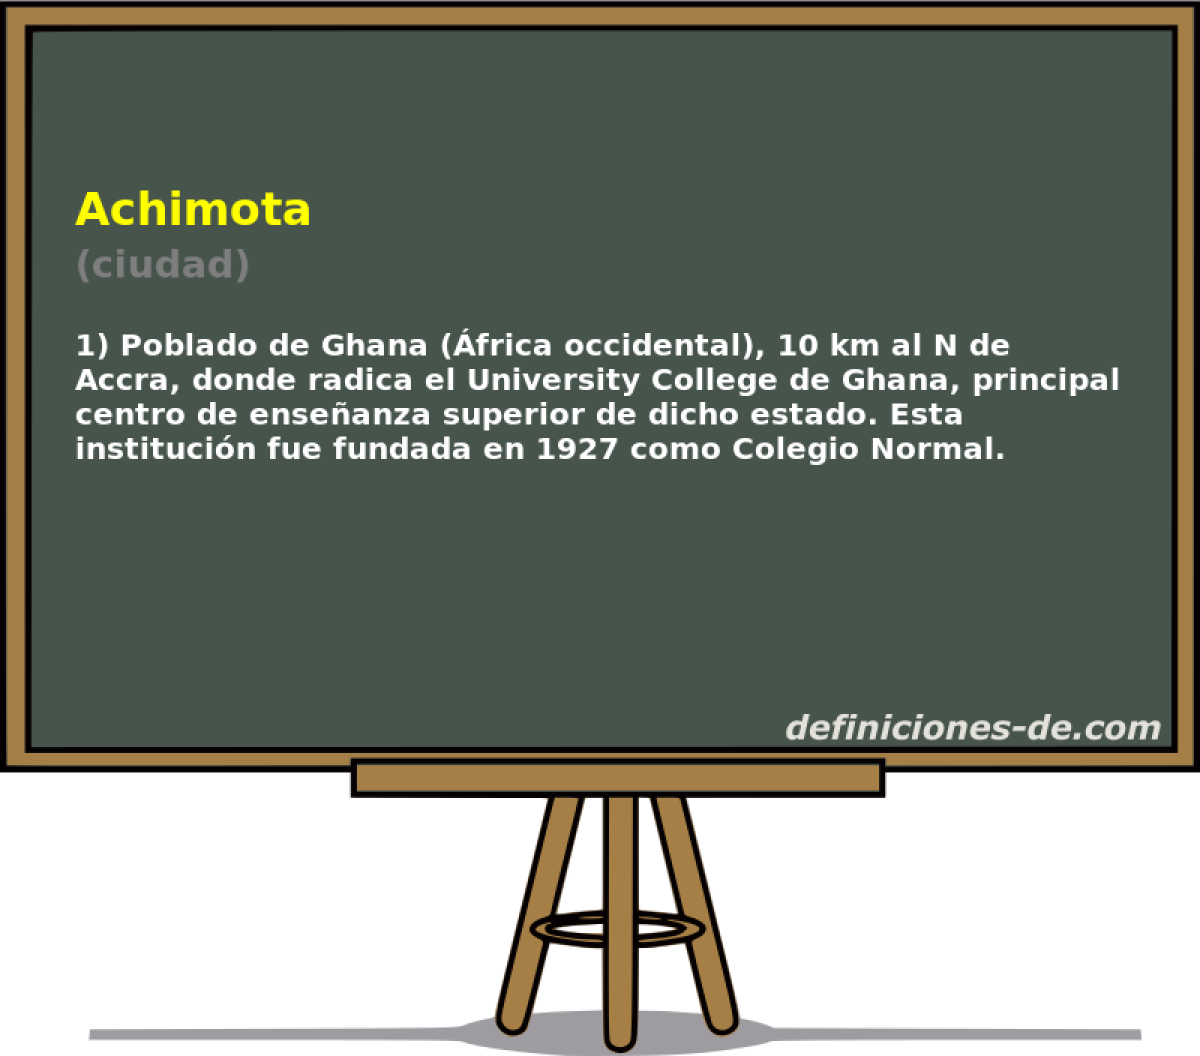 Achimota (ciudad)